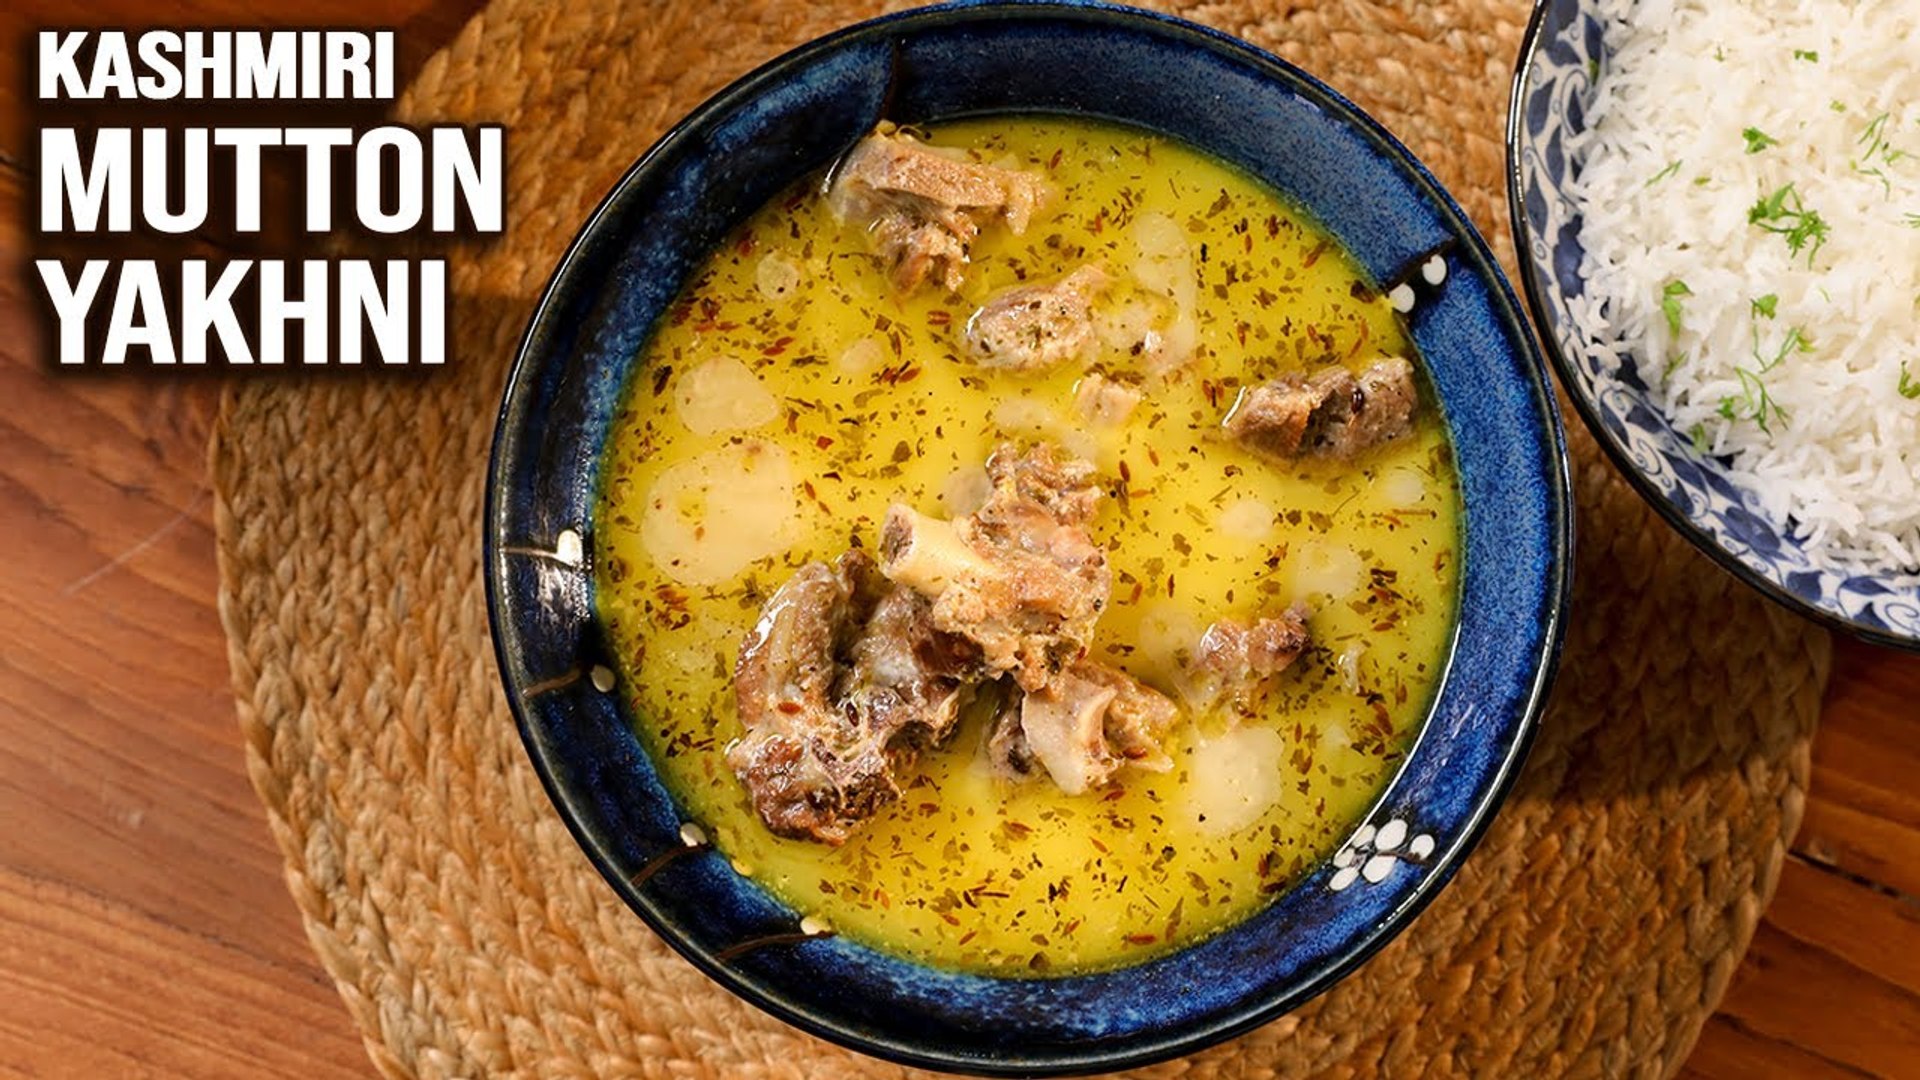 Kashmiri Mutton Yakhni | White Mutton Curry | Kashmiri Cuisine | Mutton Curry By Smita | Get Curried